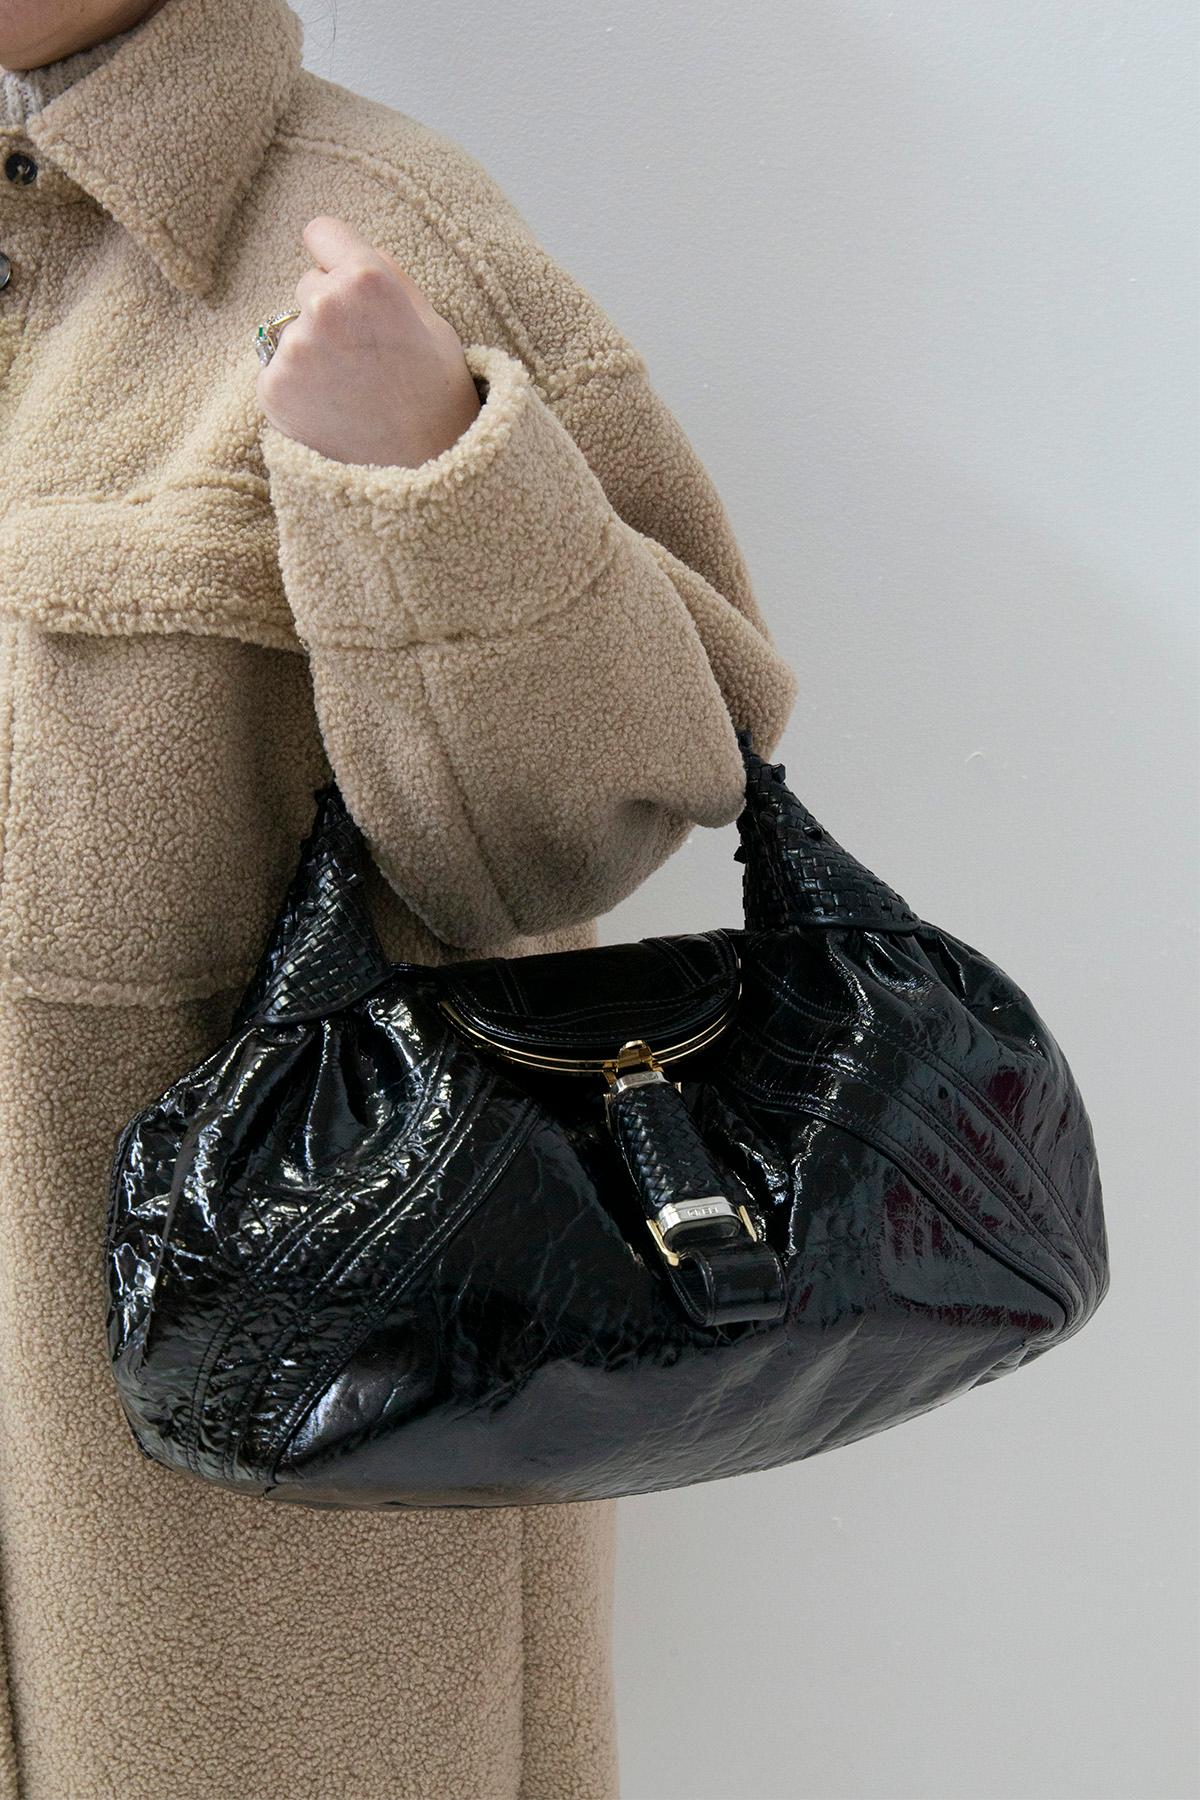 FENDI Black Shiny Leather Bag For Sale 2